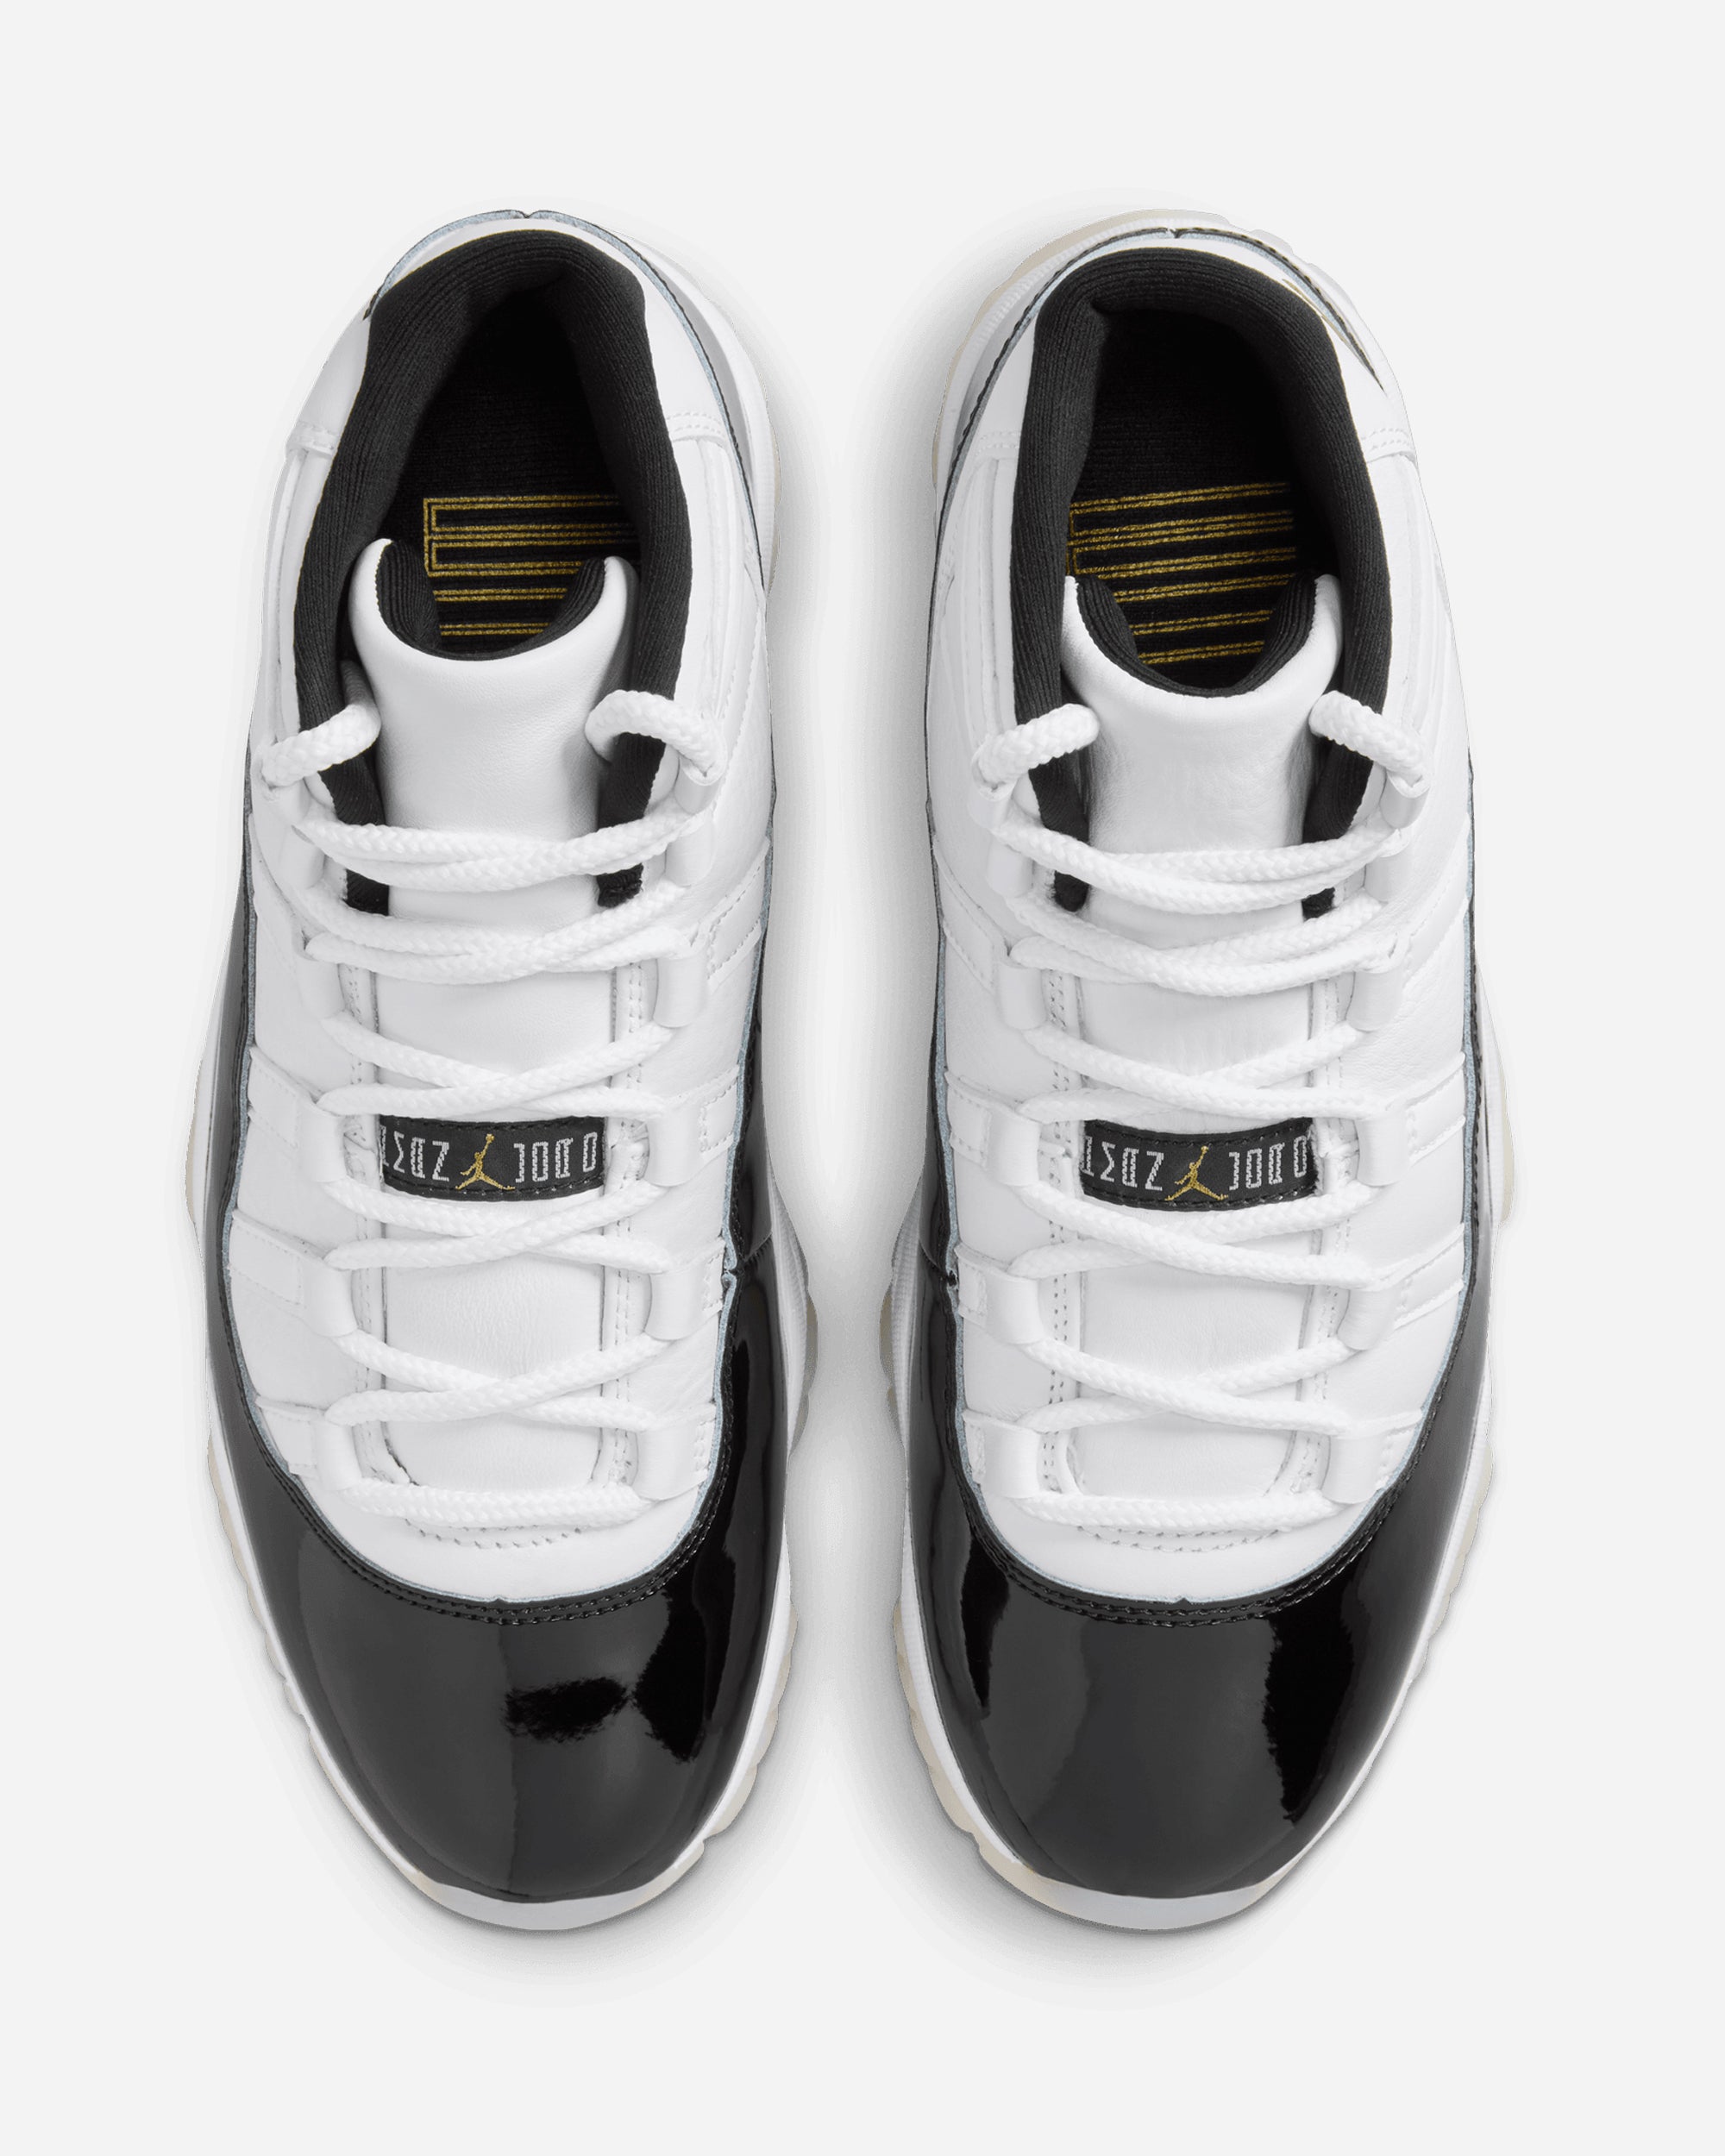 Jordan Brand Air Jordan 11 Retro 'DMP Gratitude' WHITE/METALLIC GOLD-BLACK CT8012-170